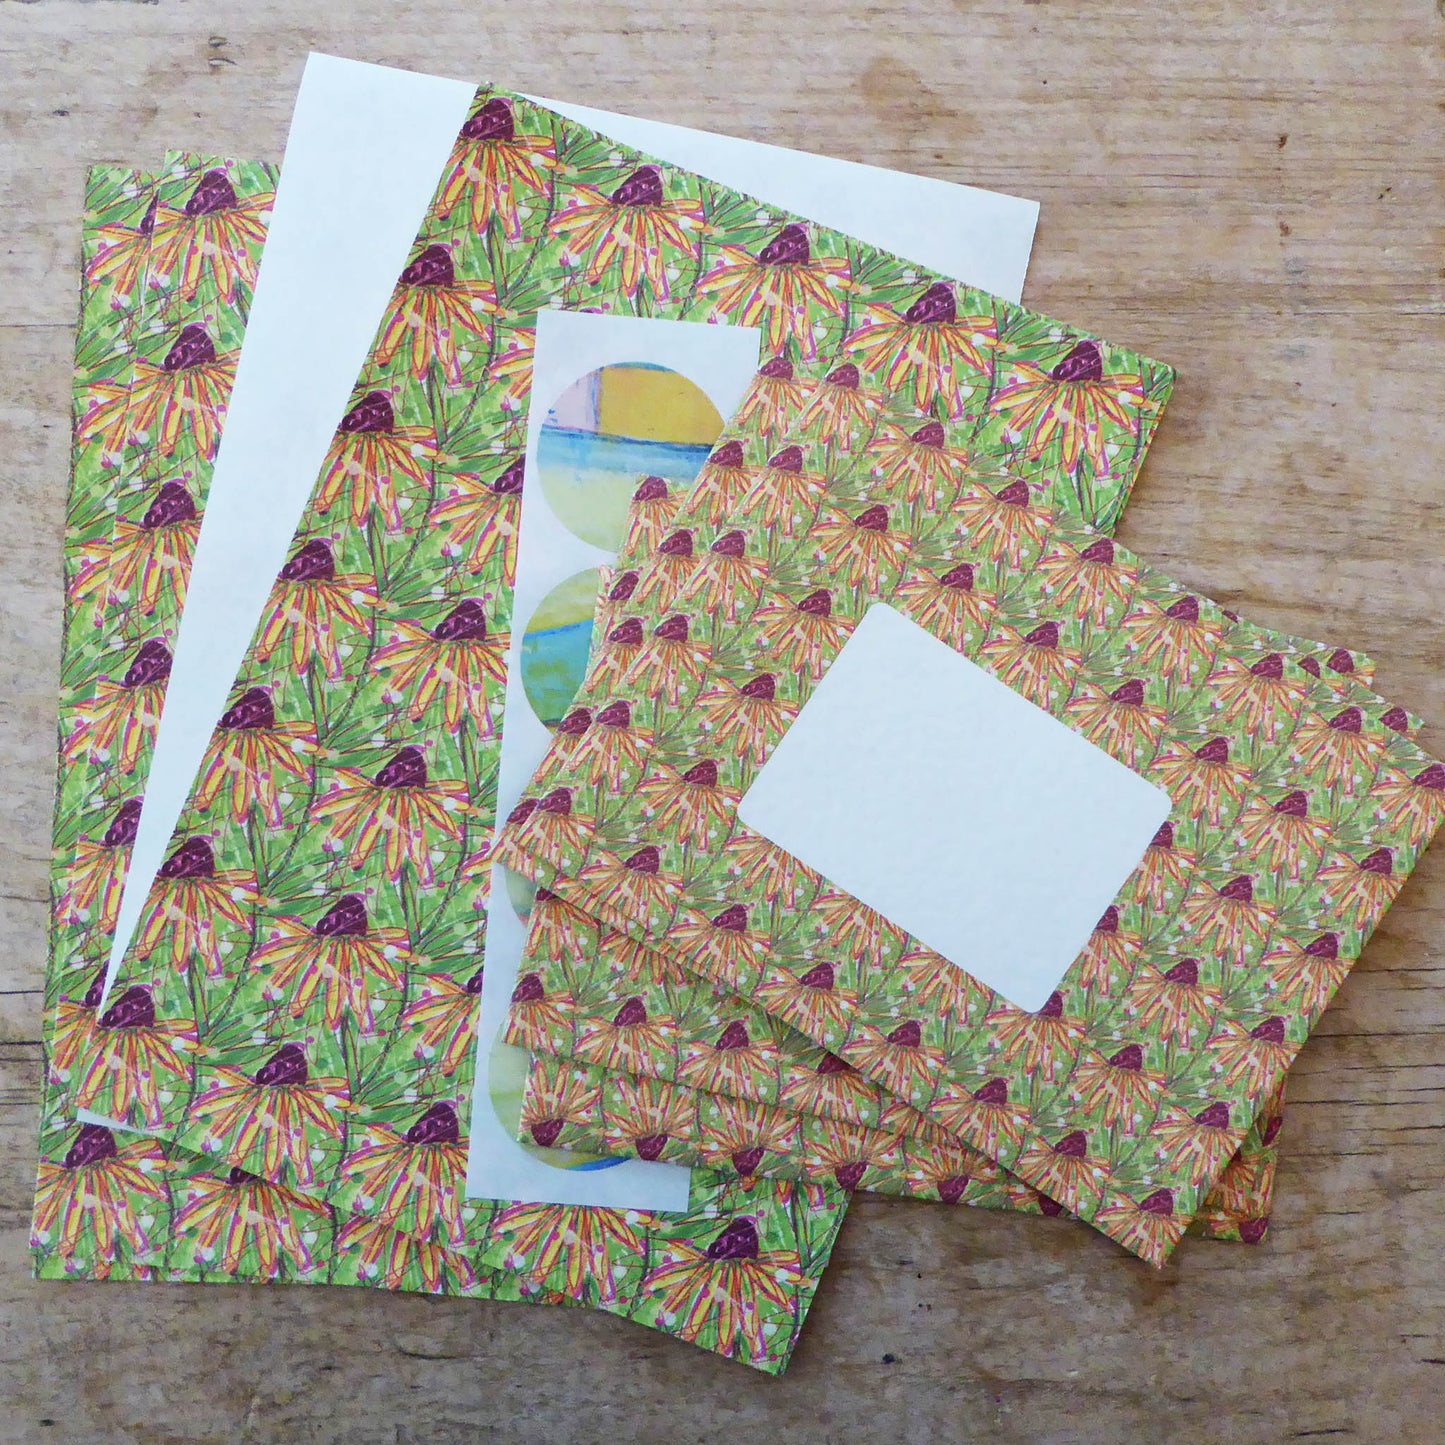 'Echinacea' - Letter Writing Set - recycled - Handmade - by Norfolk based artist Debbie Osborn